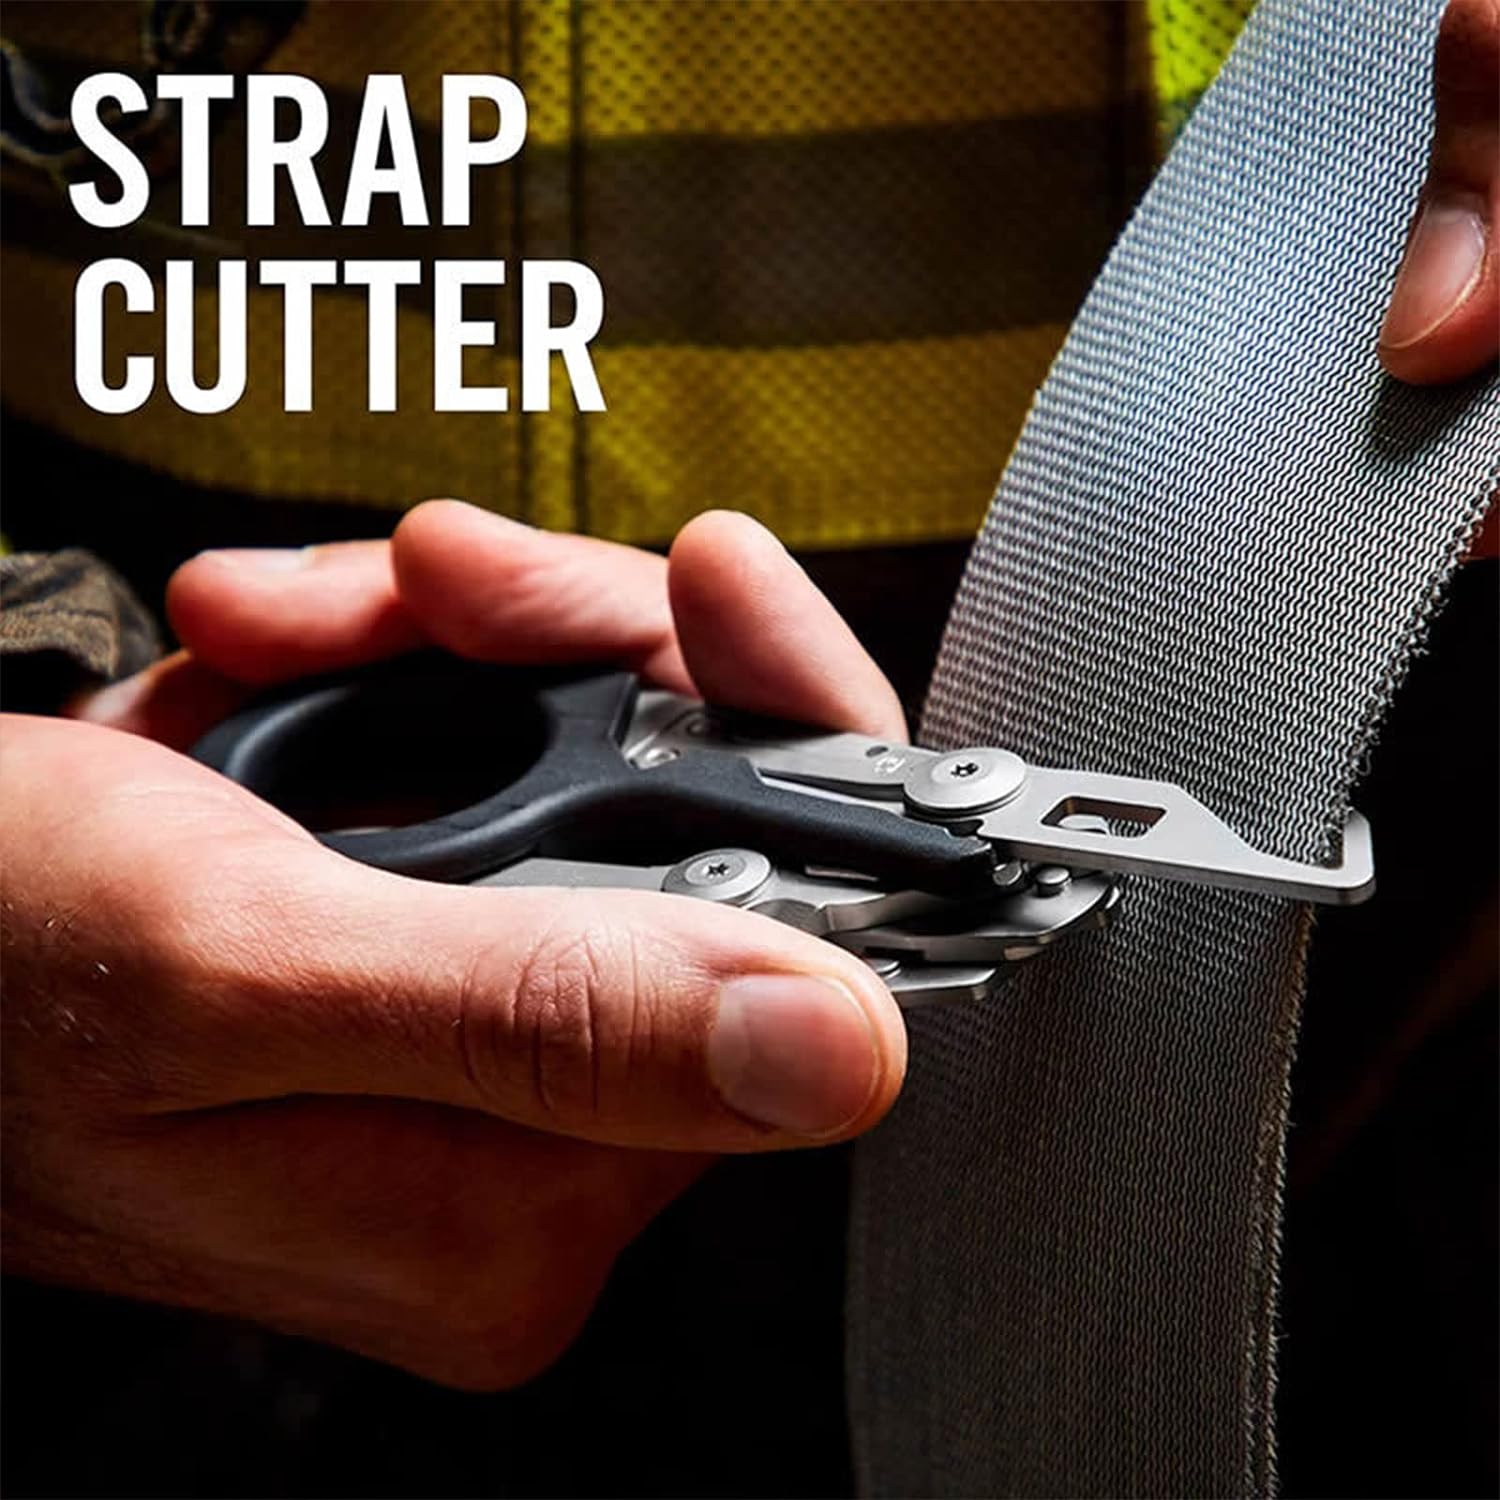 SHEH Emergency Shears,Trauma Shears Emergency Raptor Scissors Tool Stainless Steel with Strap Cutter and Glass Breaker.(Black)